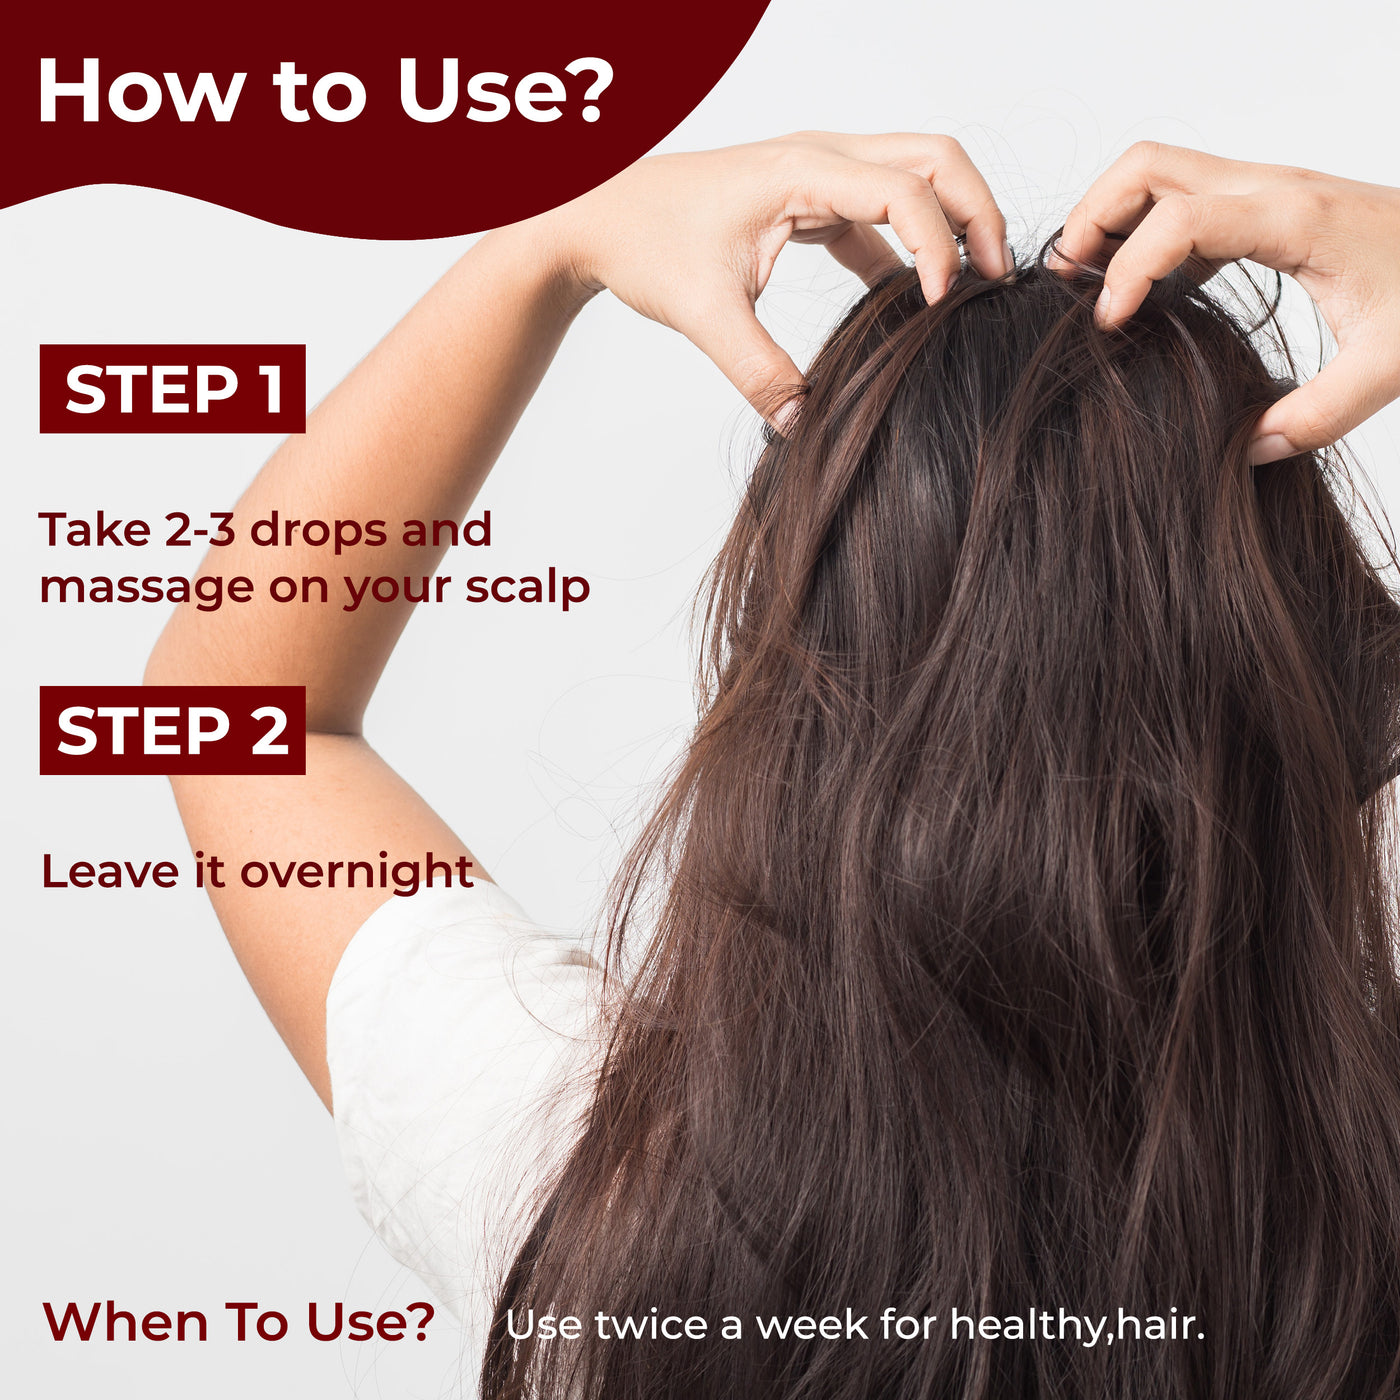 Hairfall Control Onion Scalp Serum | Onion Extracts | Induced Anagain | Healthy Hair Growth | Hair Nourishment | Enhances volume | All hair Types